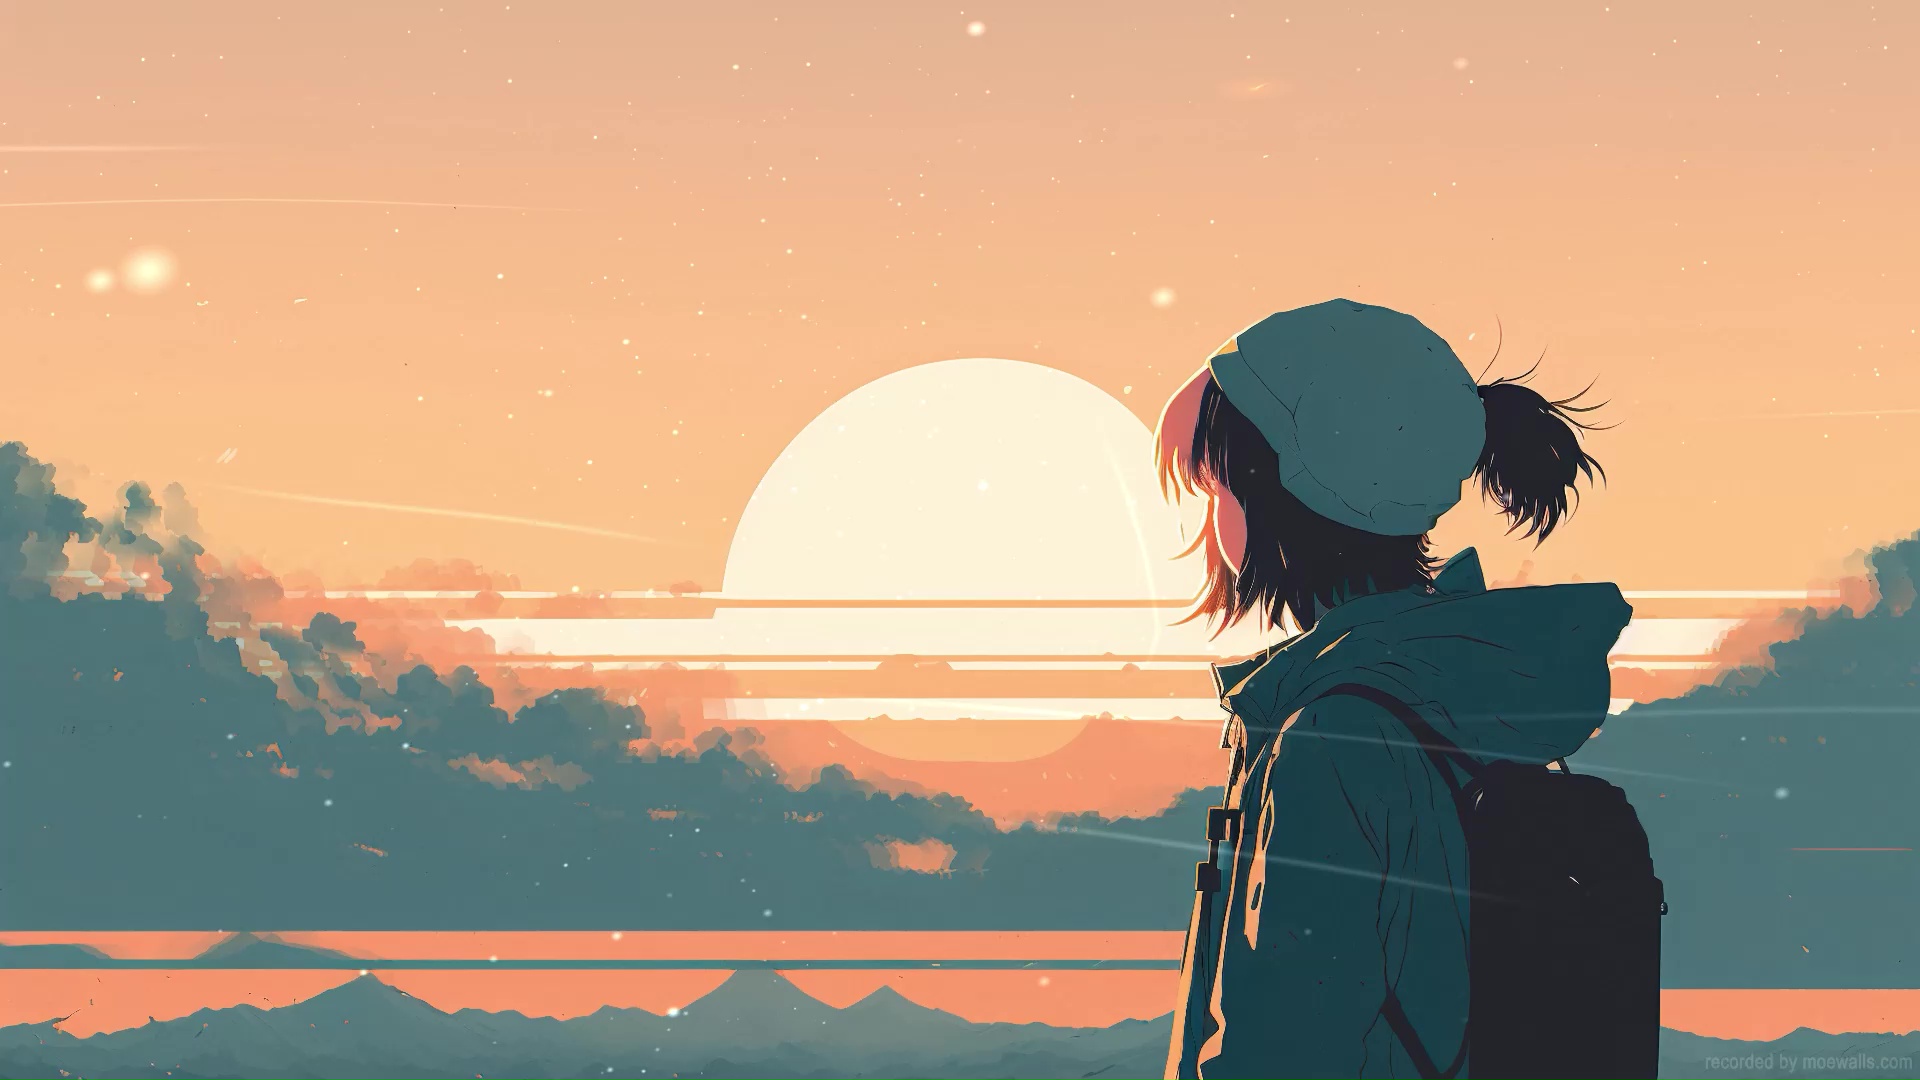 Anime Girl Looking for Sunset Wallpaper, HD Anime 4K Wallpapers